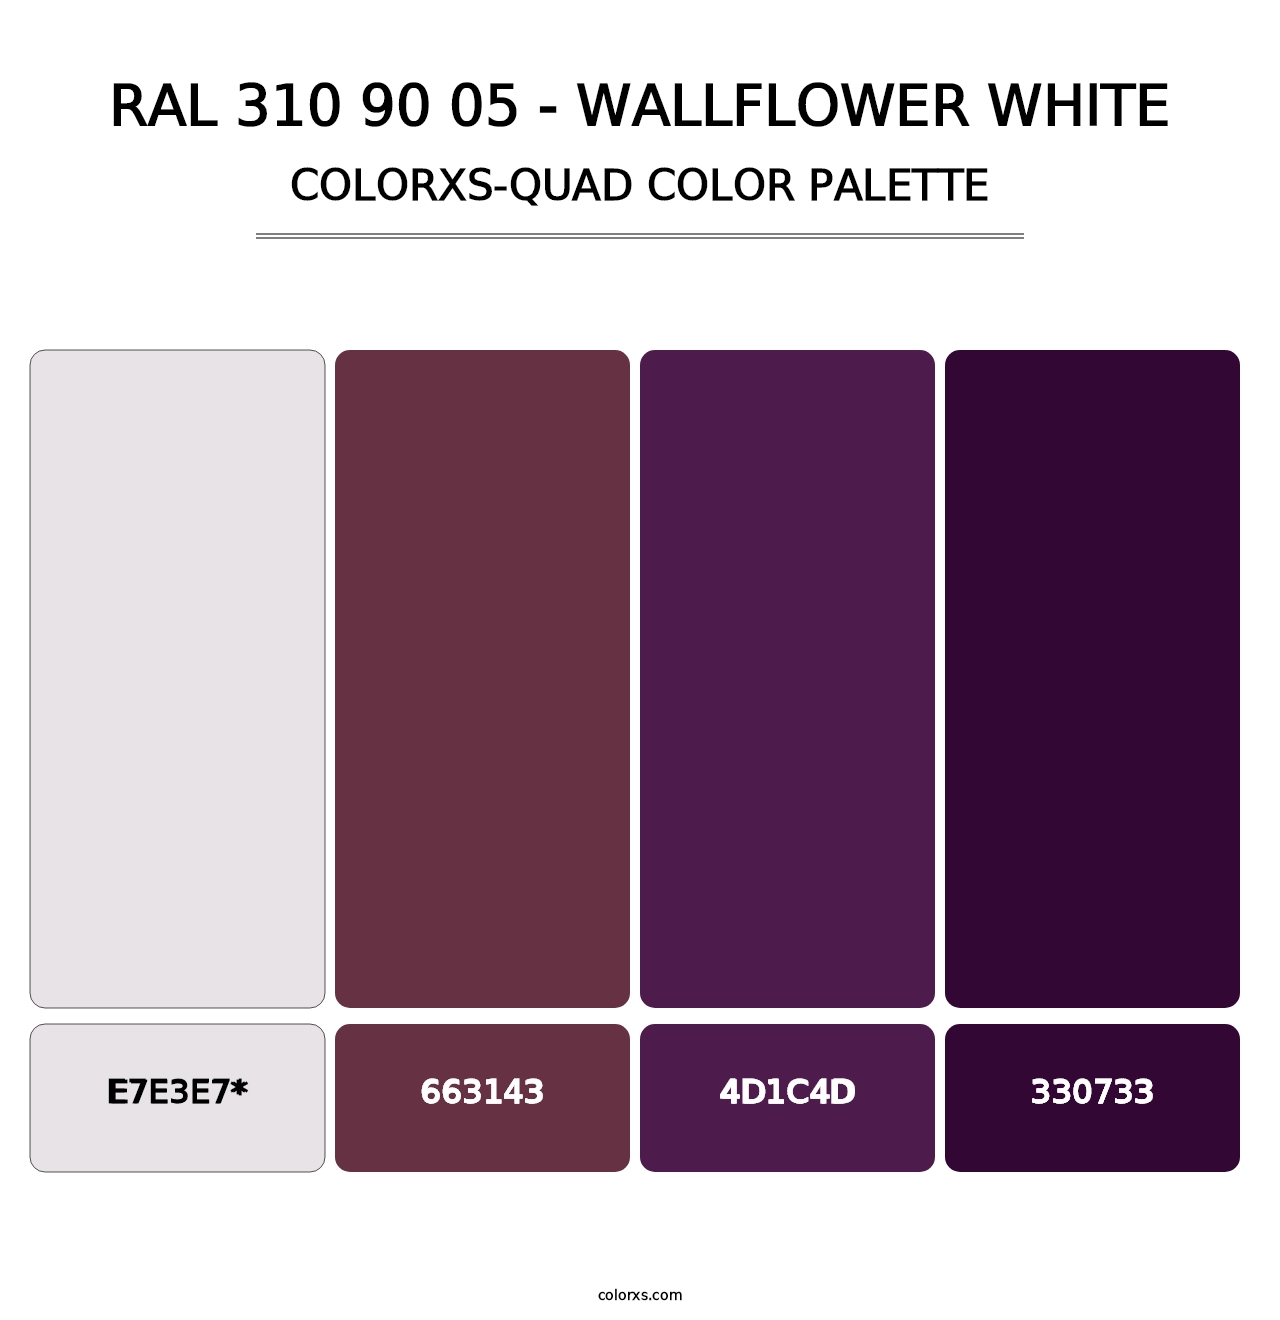 RAL 310 90 05 - Wallflower White - Colorxs Quad Palette